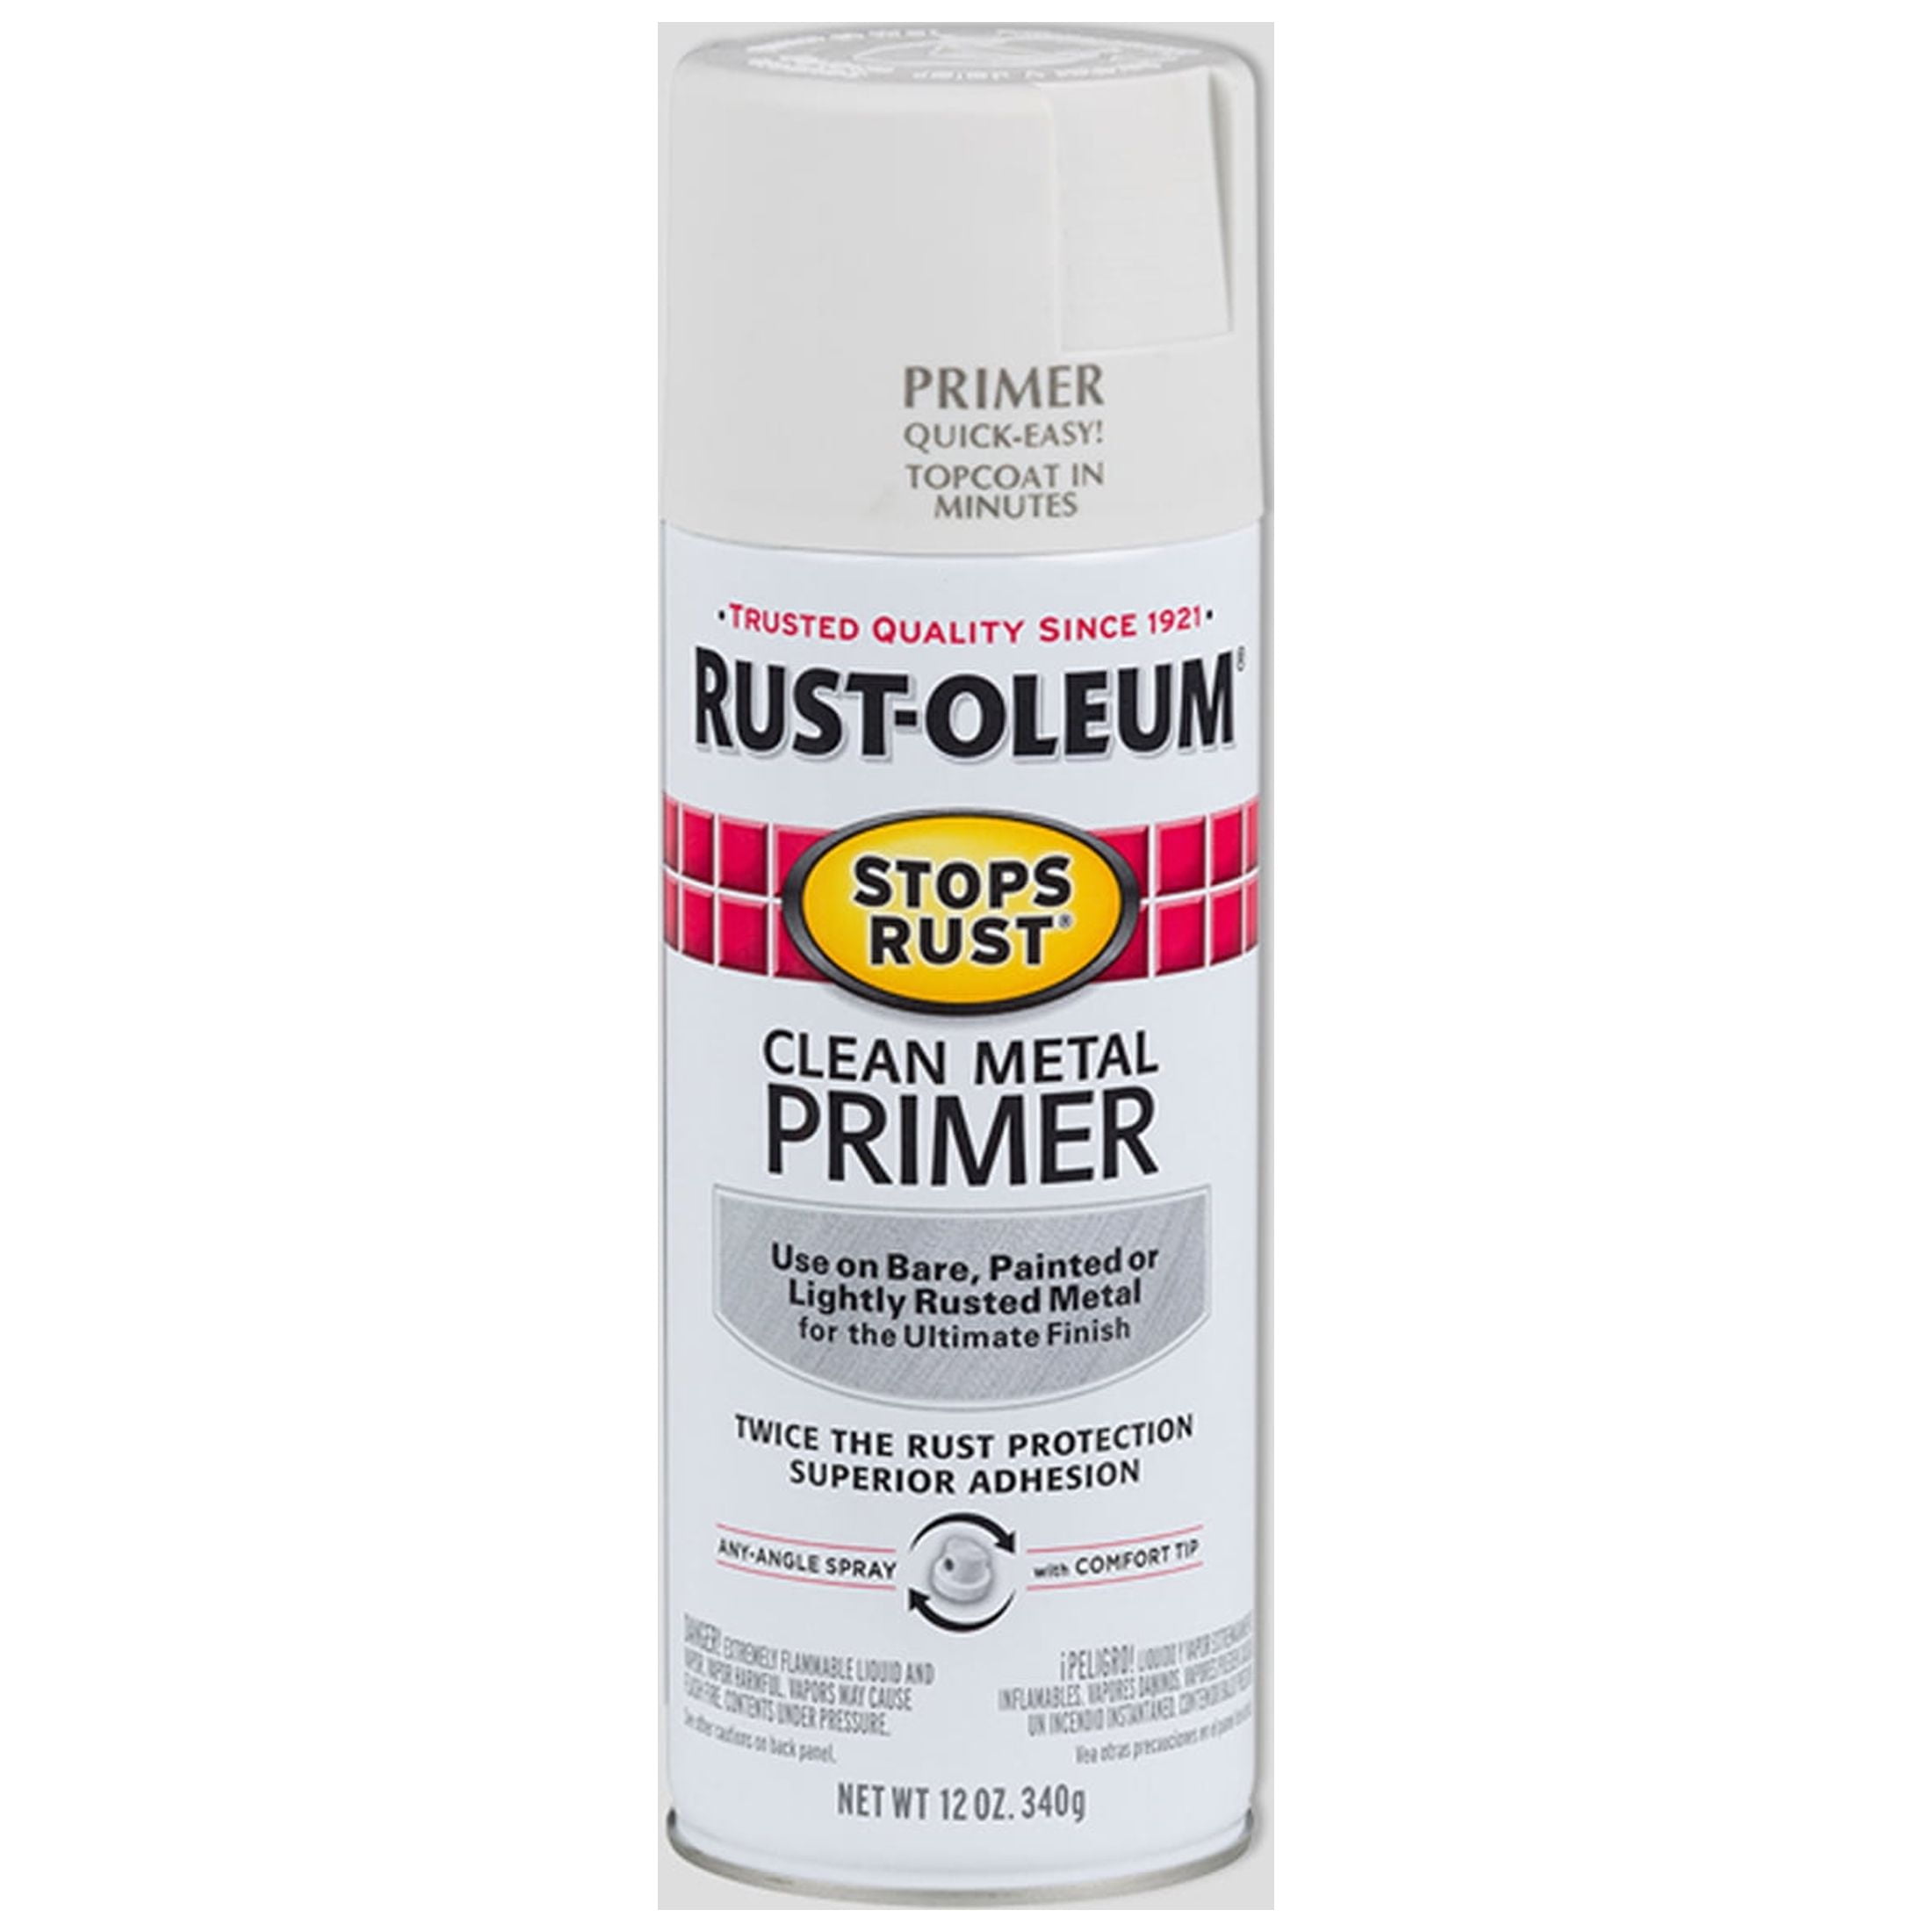 Rust-Oleum Stops Rust Flat Gray Spray Primer (NET WT. 12-oz)